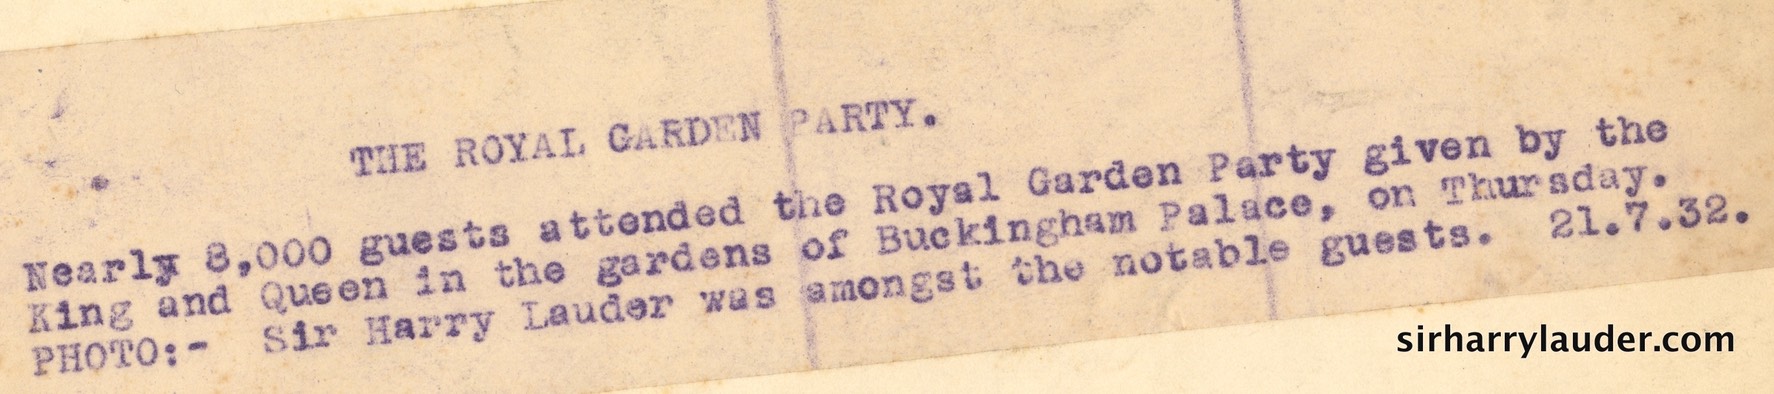 Sir Harry at Buckingham Palace 1932 Reverse